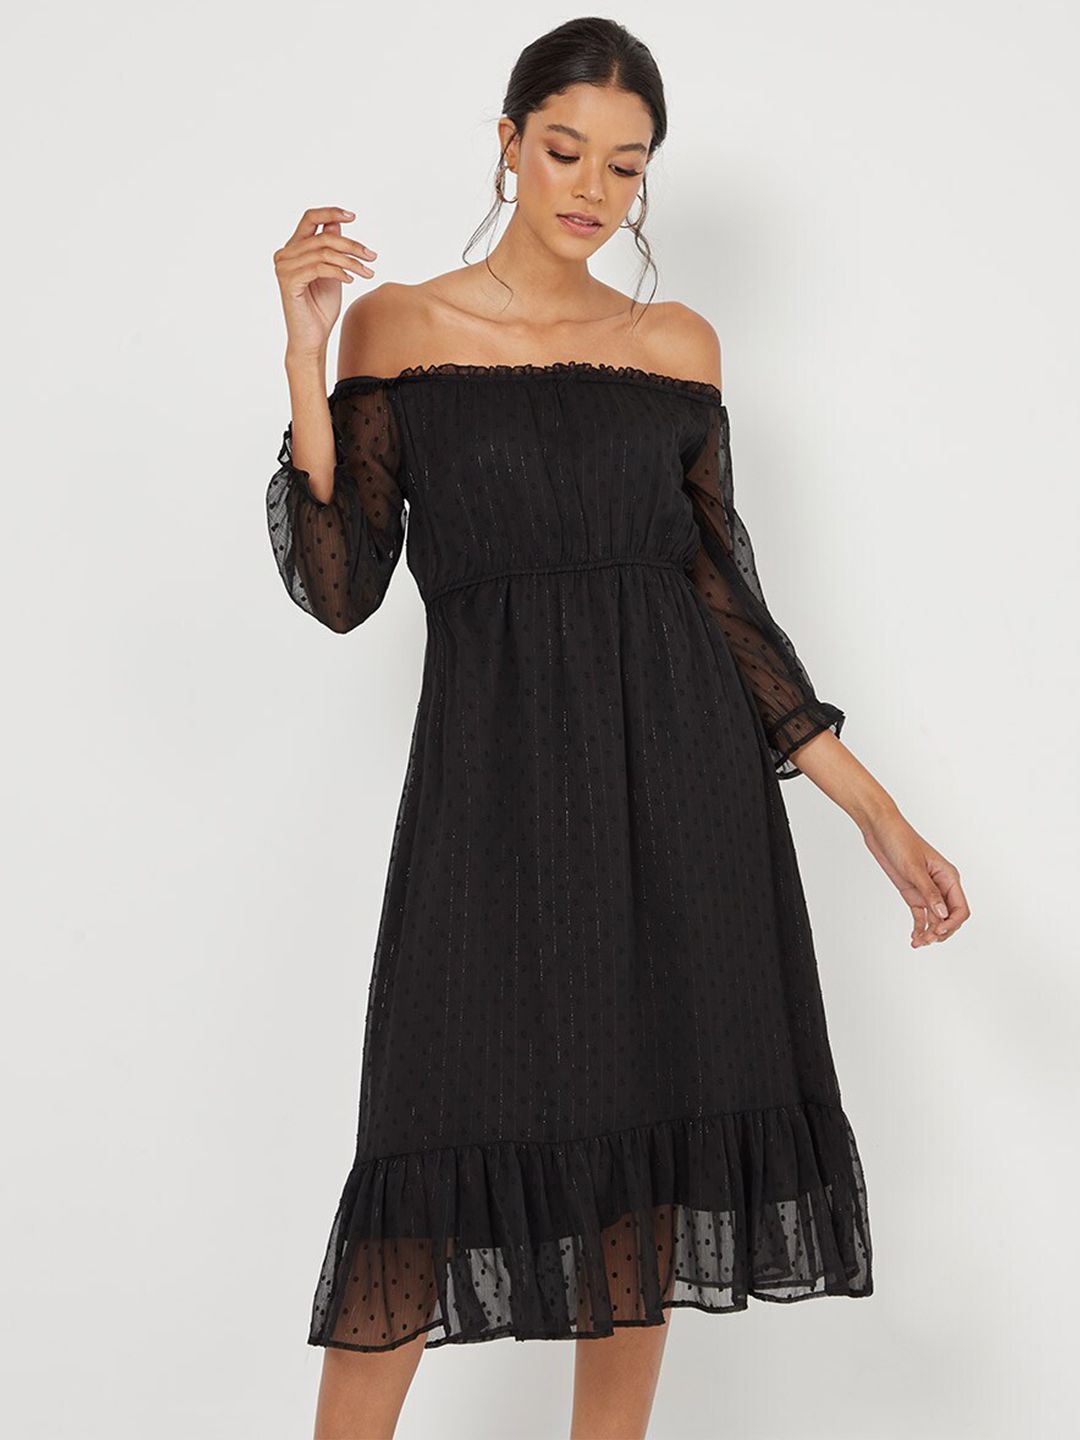 Styli Black Sheath Dress Price in India